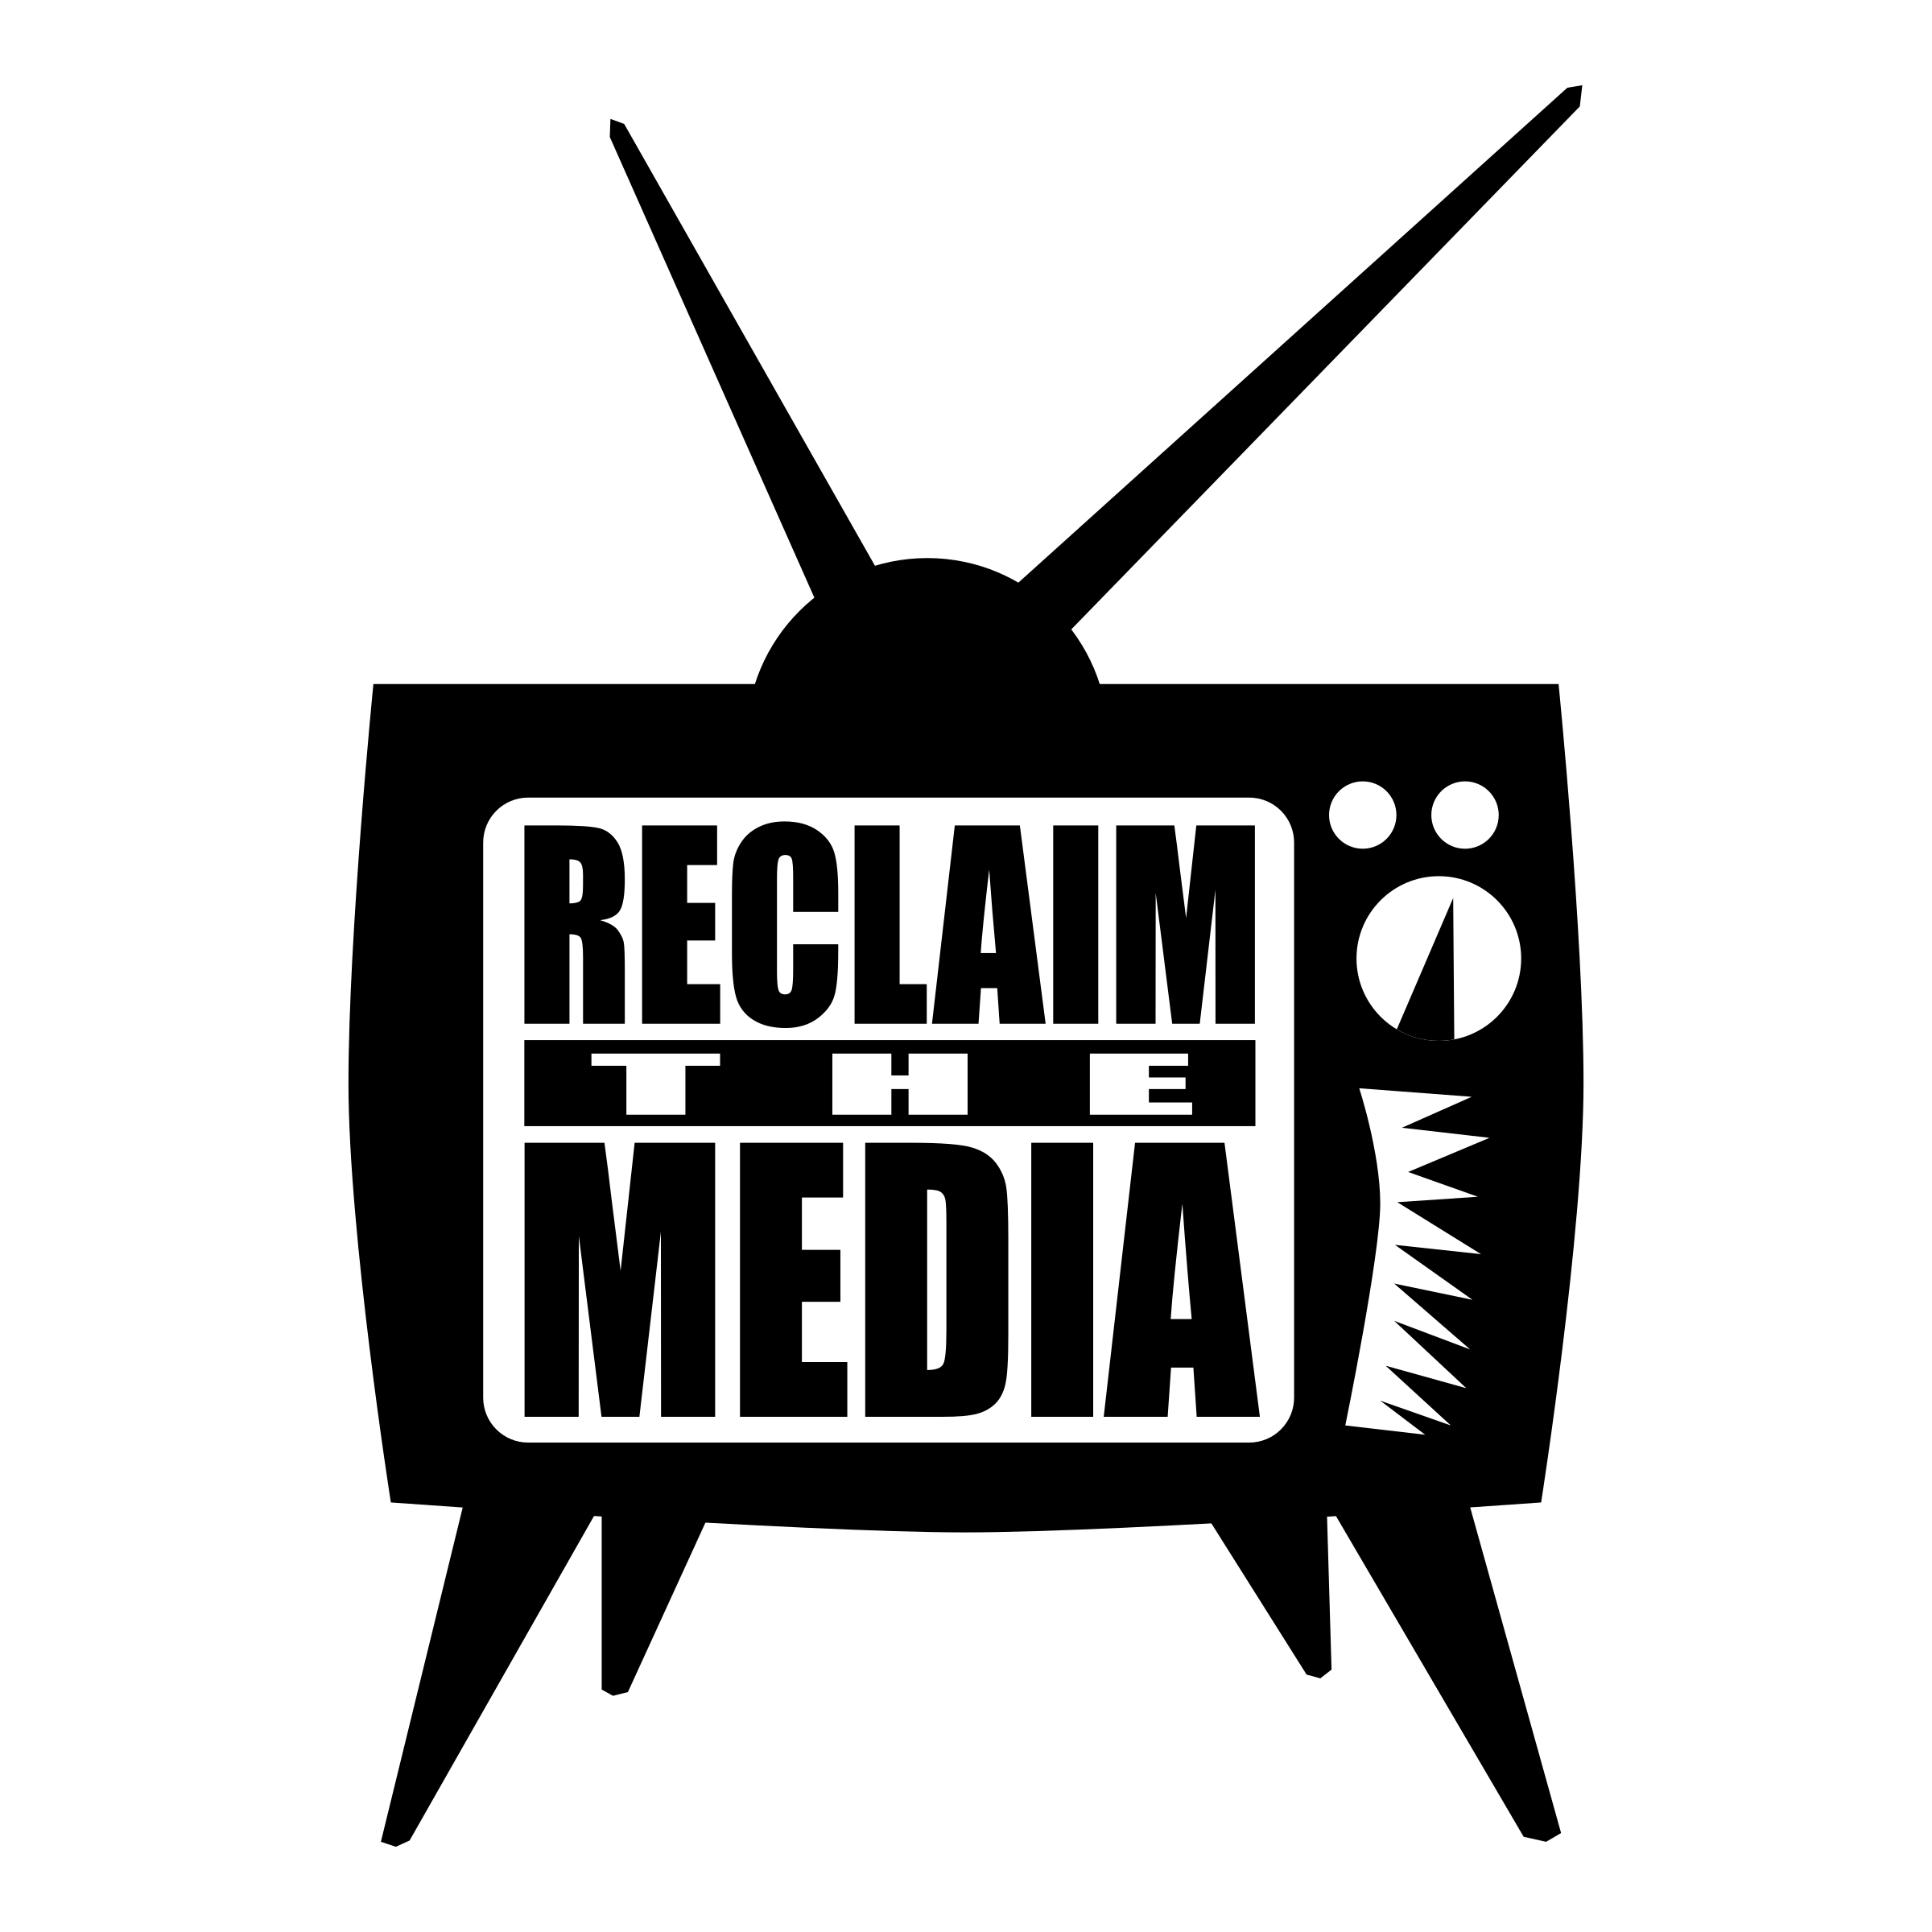 Reclaim Logo - Reclaim The Media Logo PNG Transparent & SVG Vector - Freebie Supply